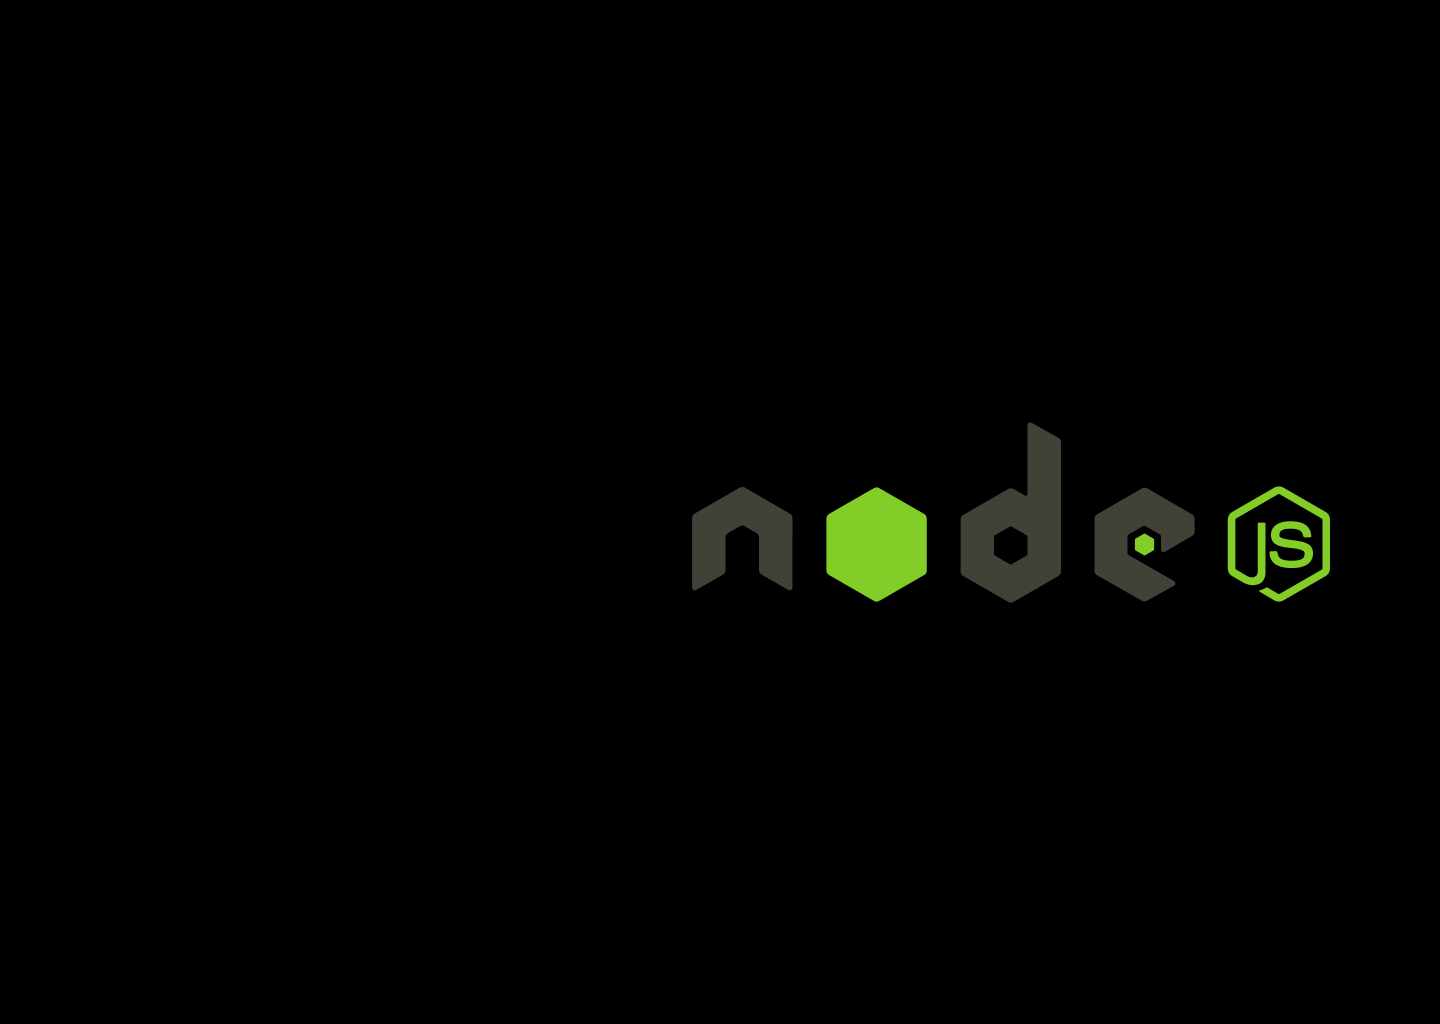 Image of Node JS with Black background